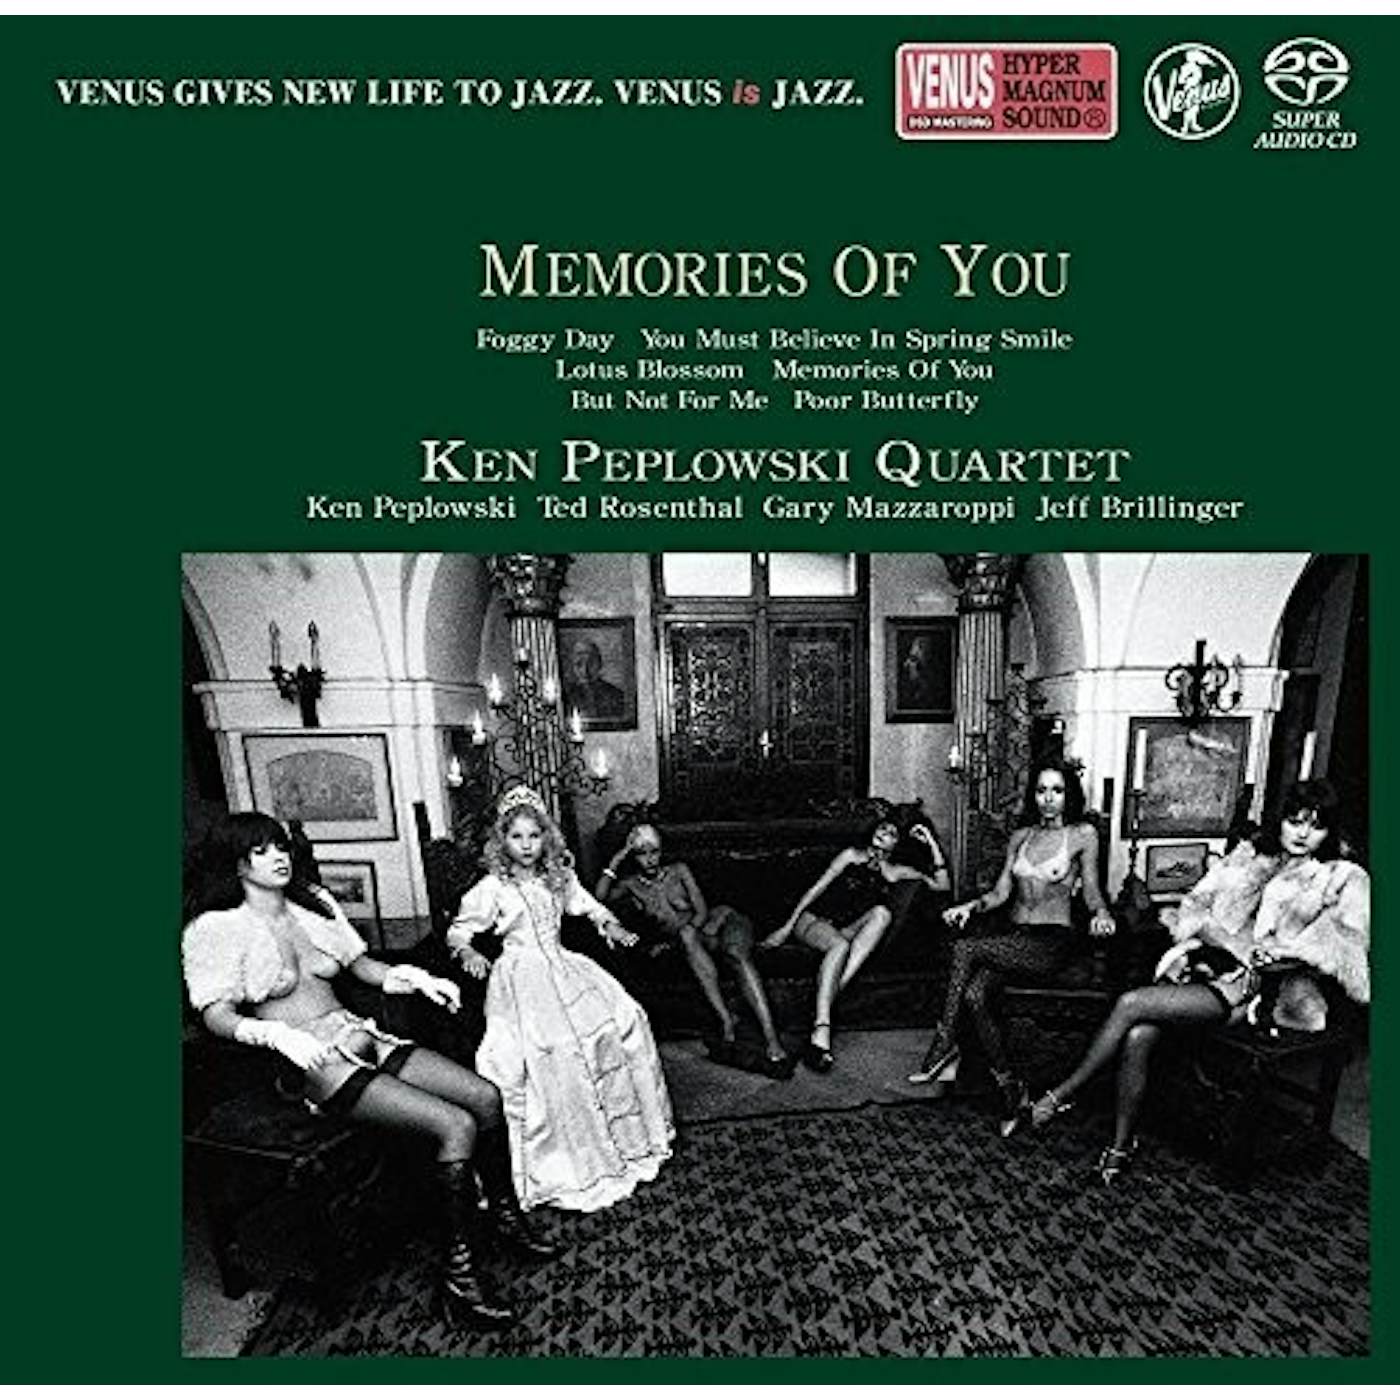 Ken Peplowski MEMORIES OF YOU VOL 2 Super Audio CD